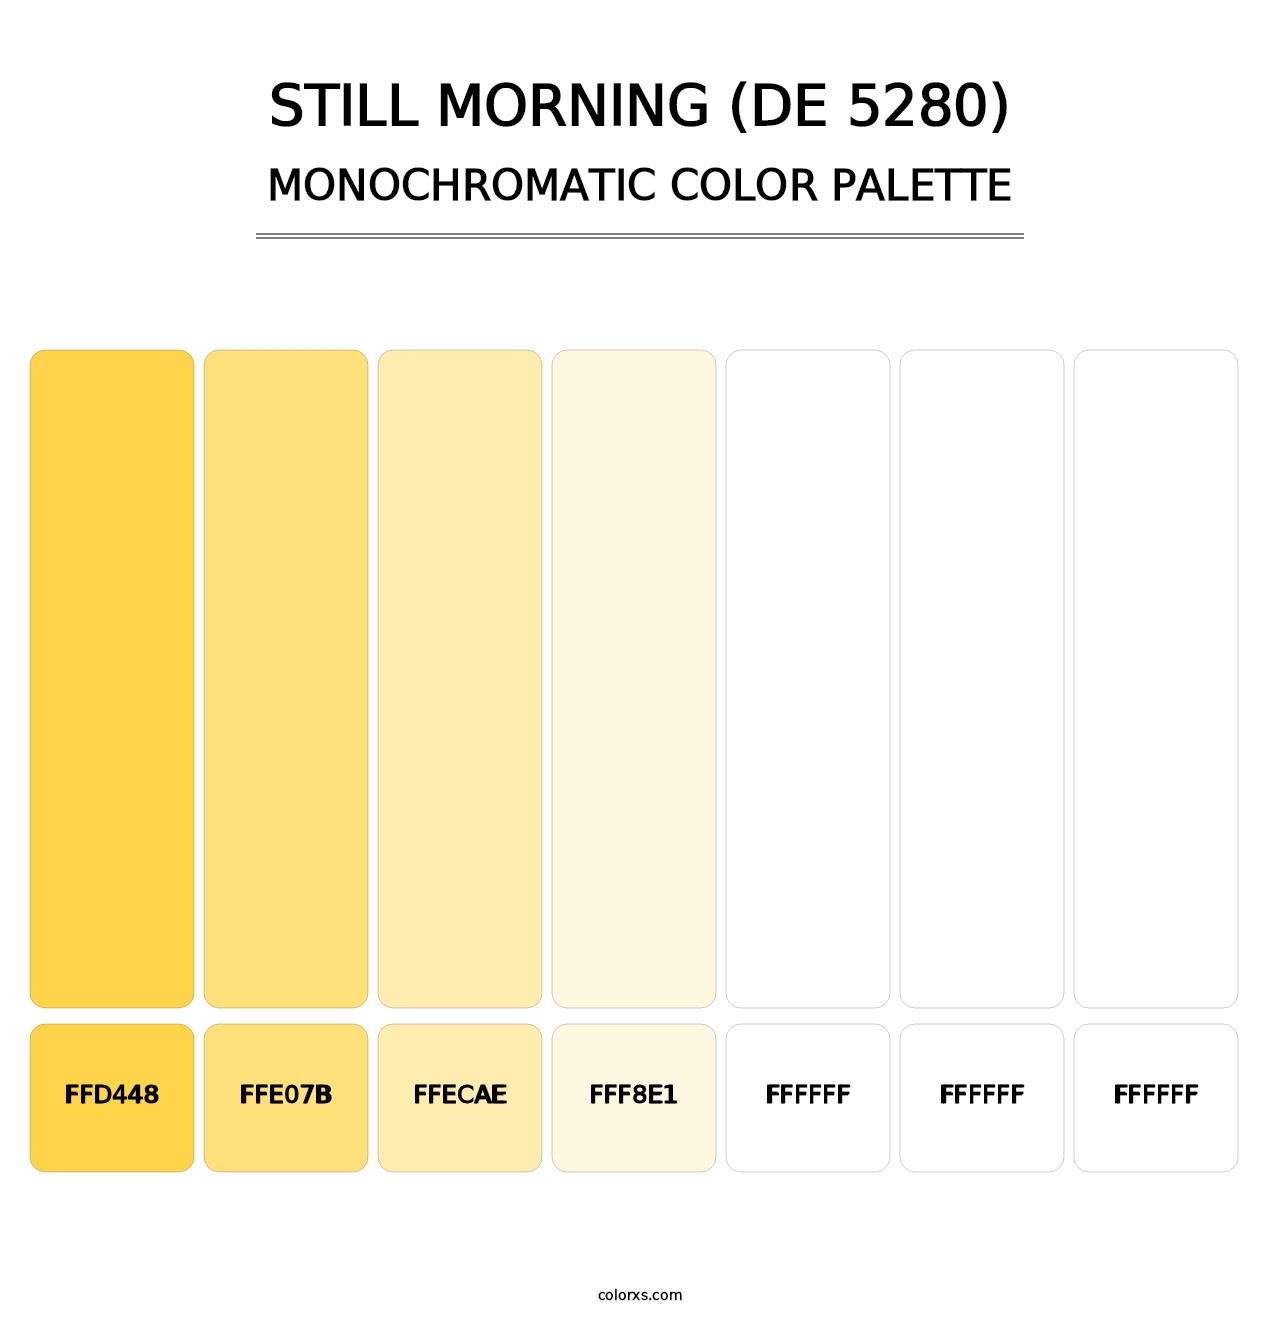 Still Morning (DE 5280) - Monochromatic Color Palette